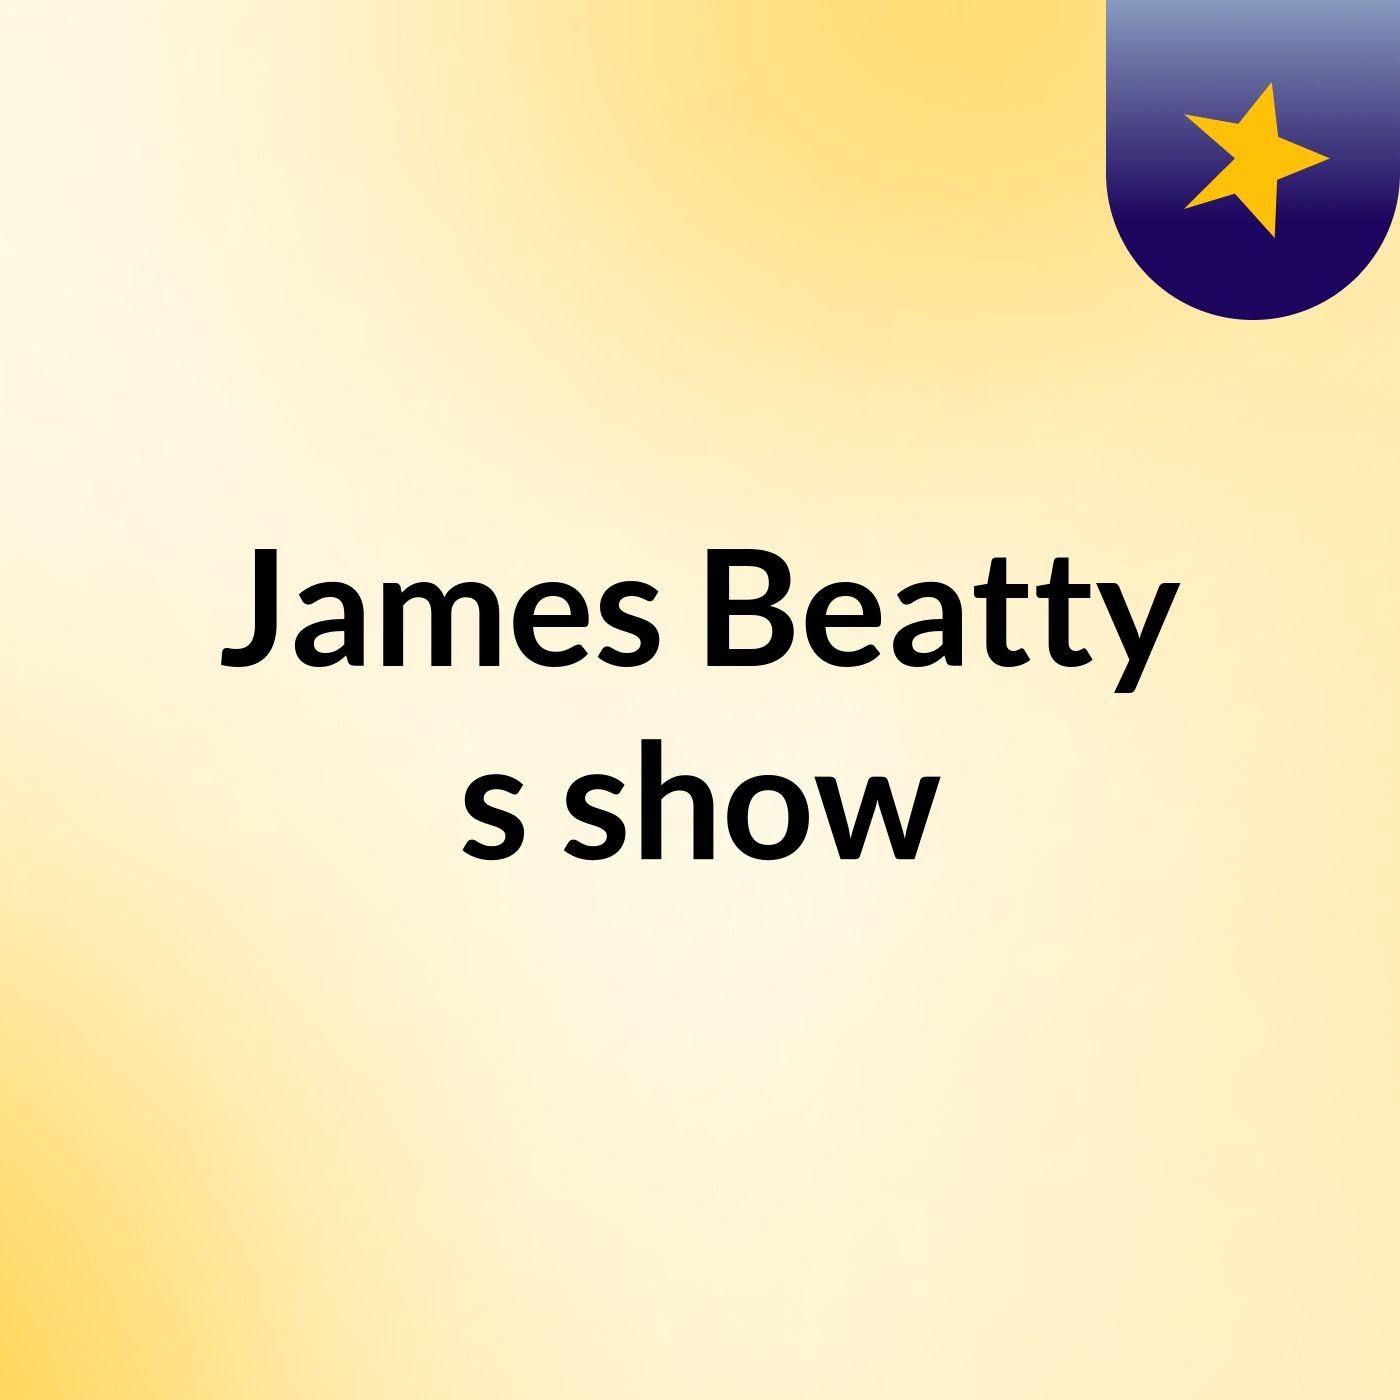 James Beatty's show